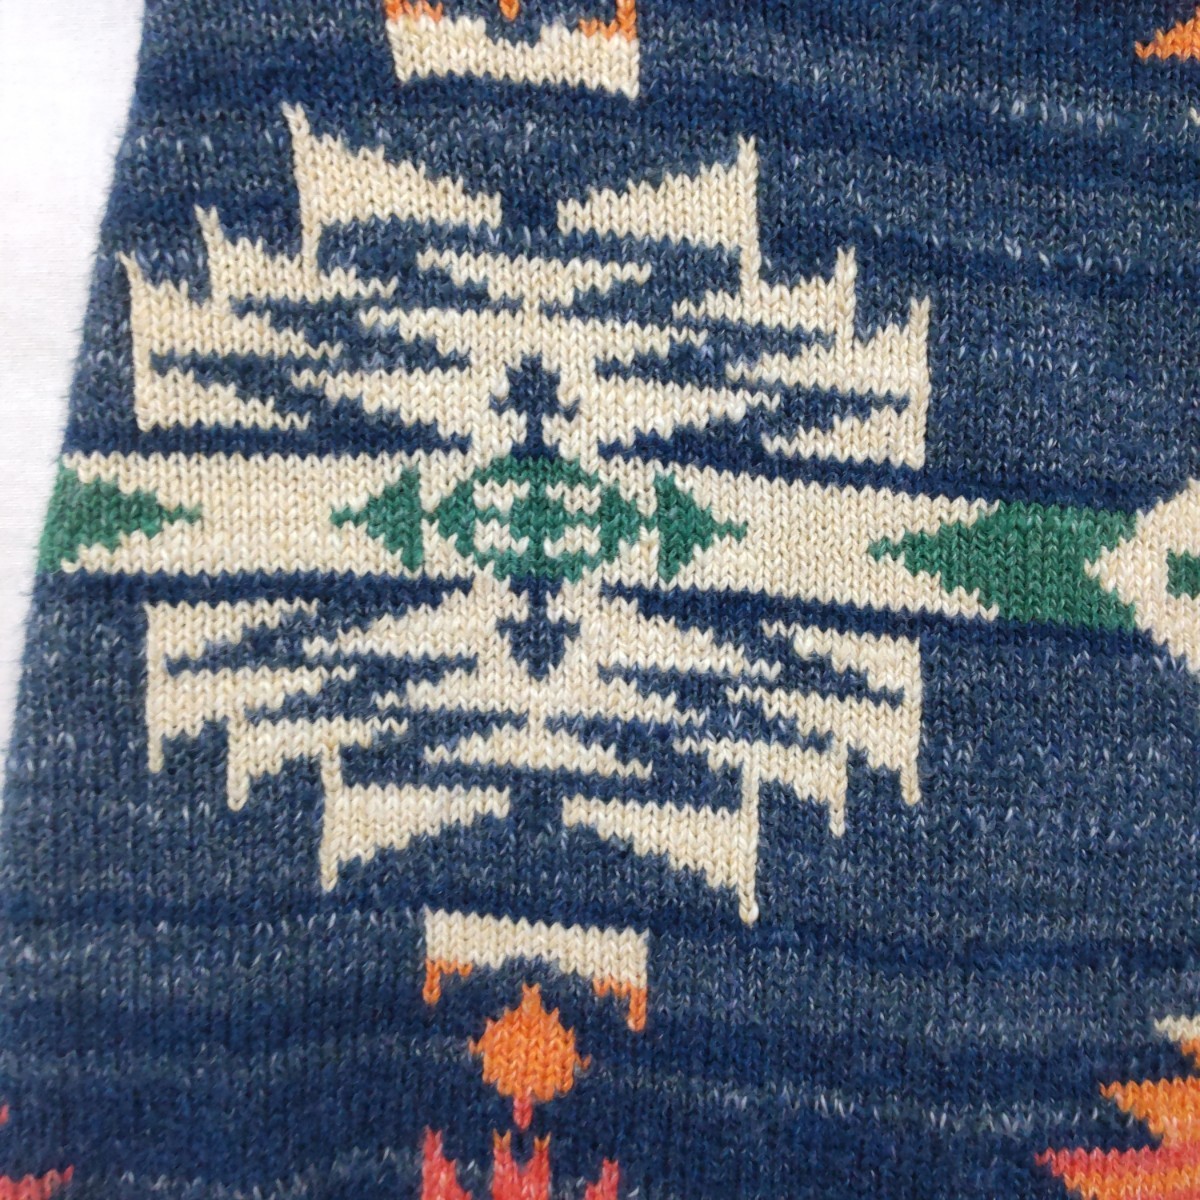 POLO Ralph Lauren LAP skirt neitib pattern to coil skirt Polo Ralph Lauren cotton knitted chimayo pattern 